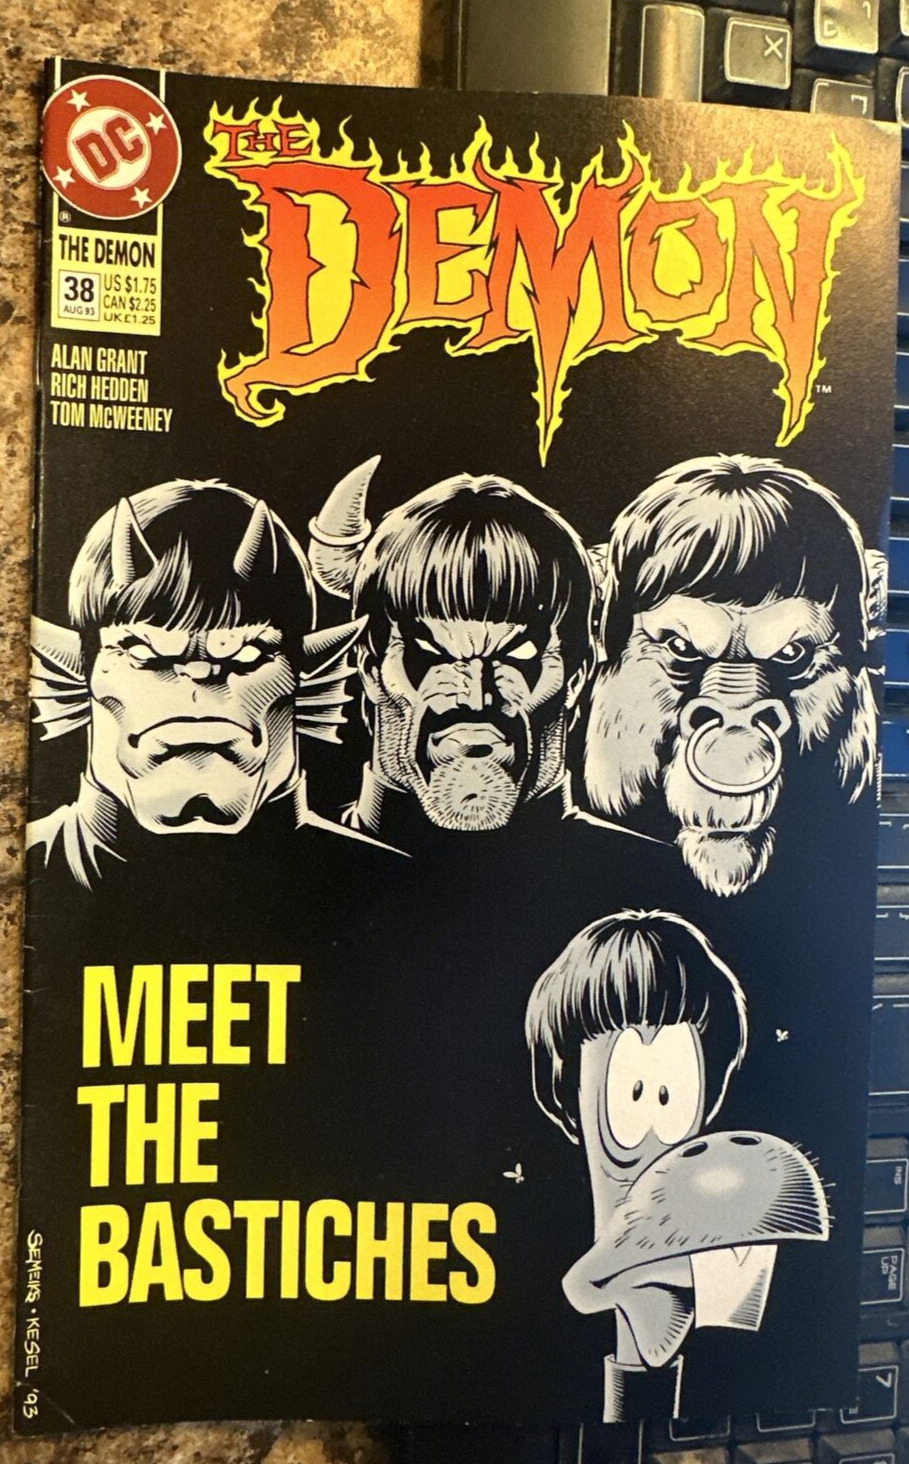 the DEMON #38 1993 MOP TOP BEATLES ALBUM COVER SPOOF BASTICHES  DC COMIC BOOK